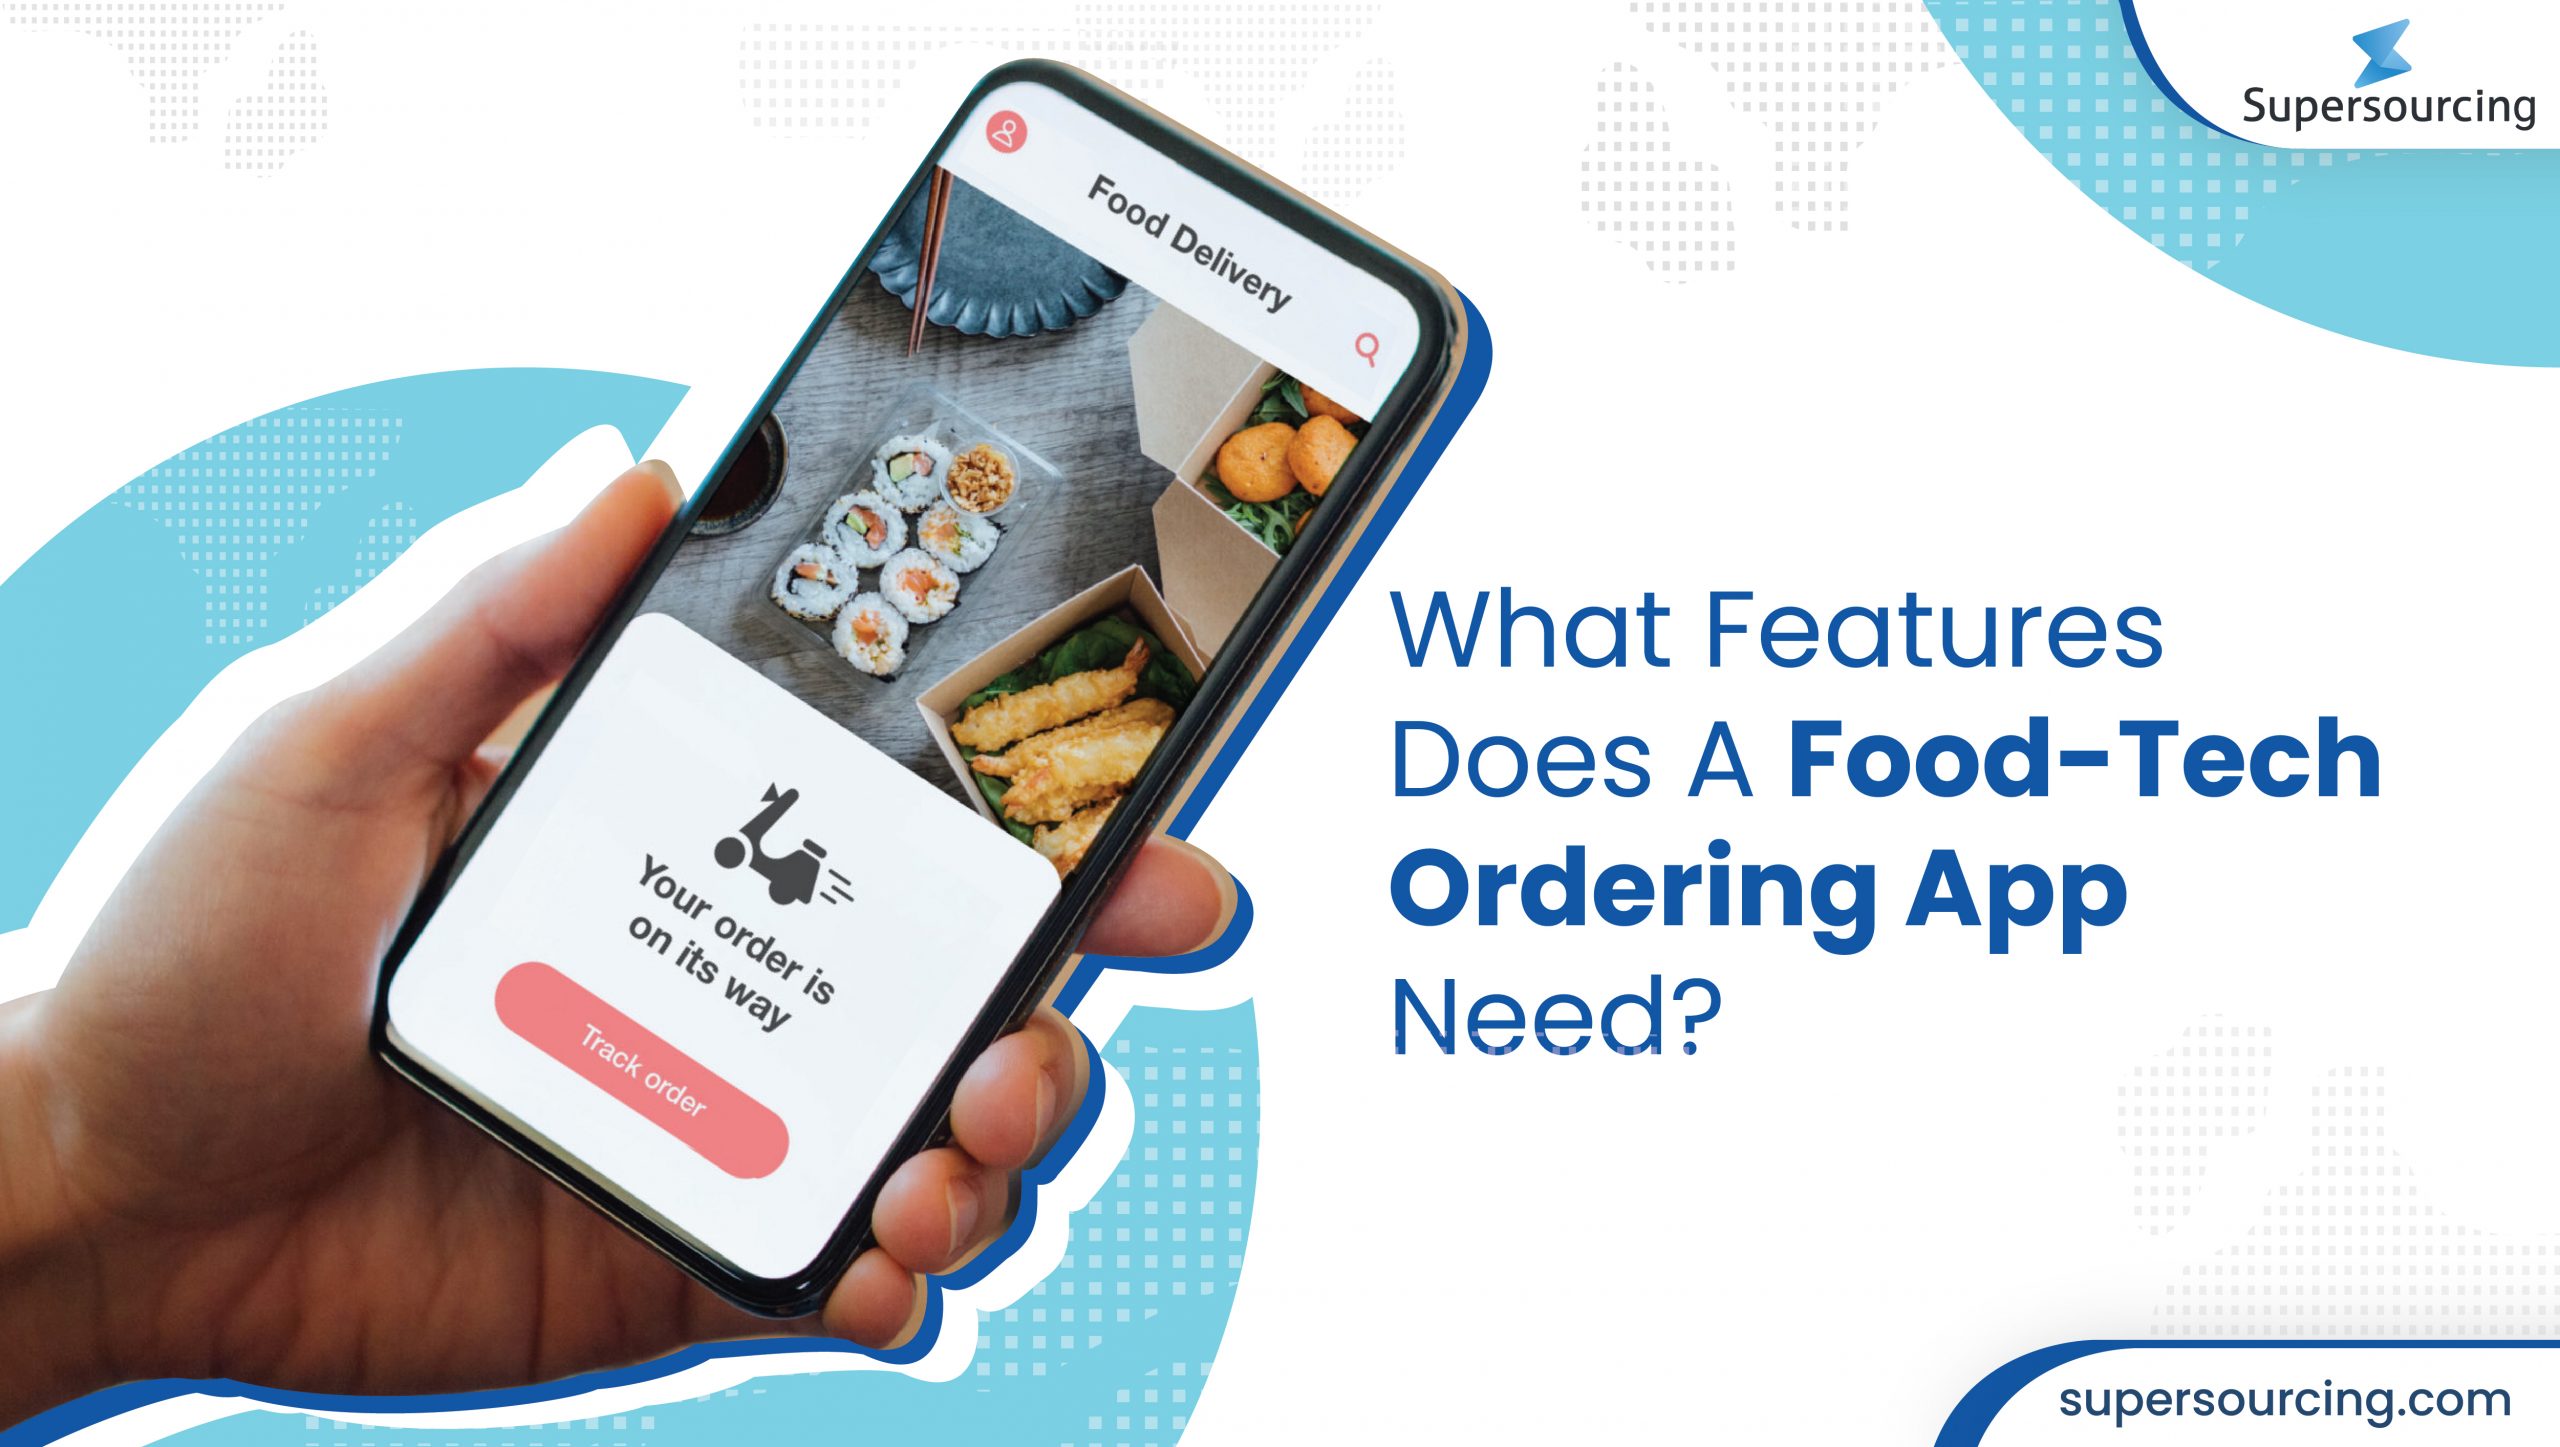 foodtech ordering app